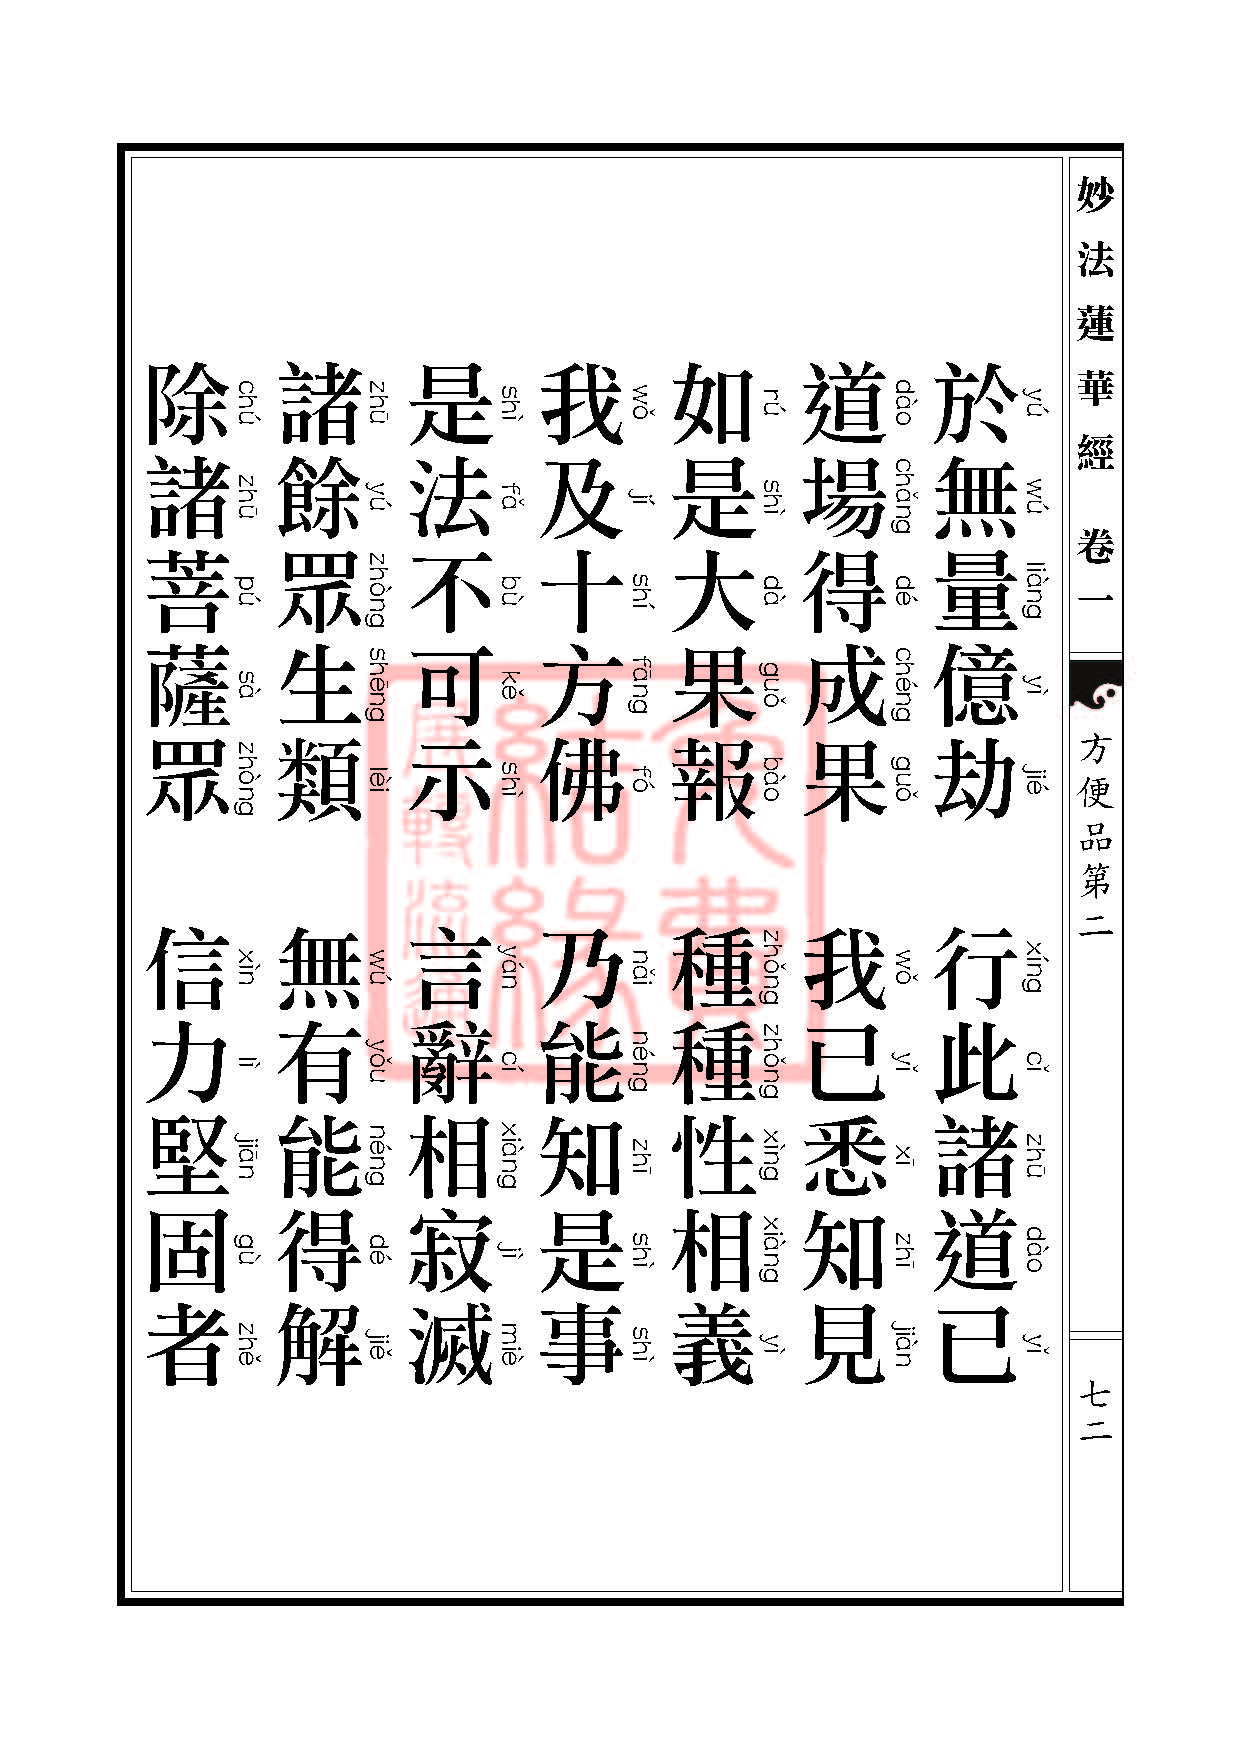 Book_FHJ_HK-A6-PY_Web_页面_072.jpg